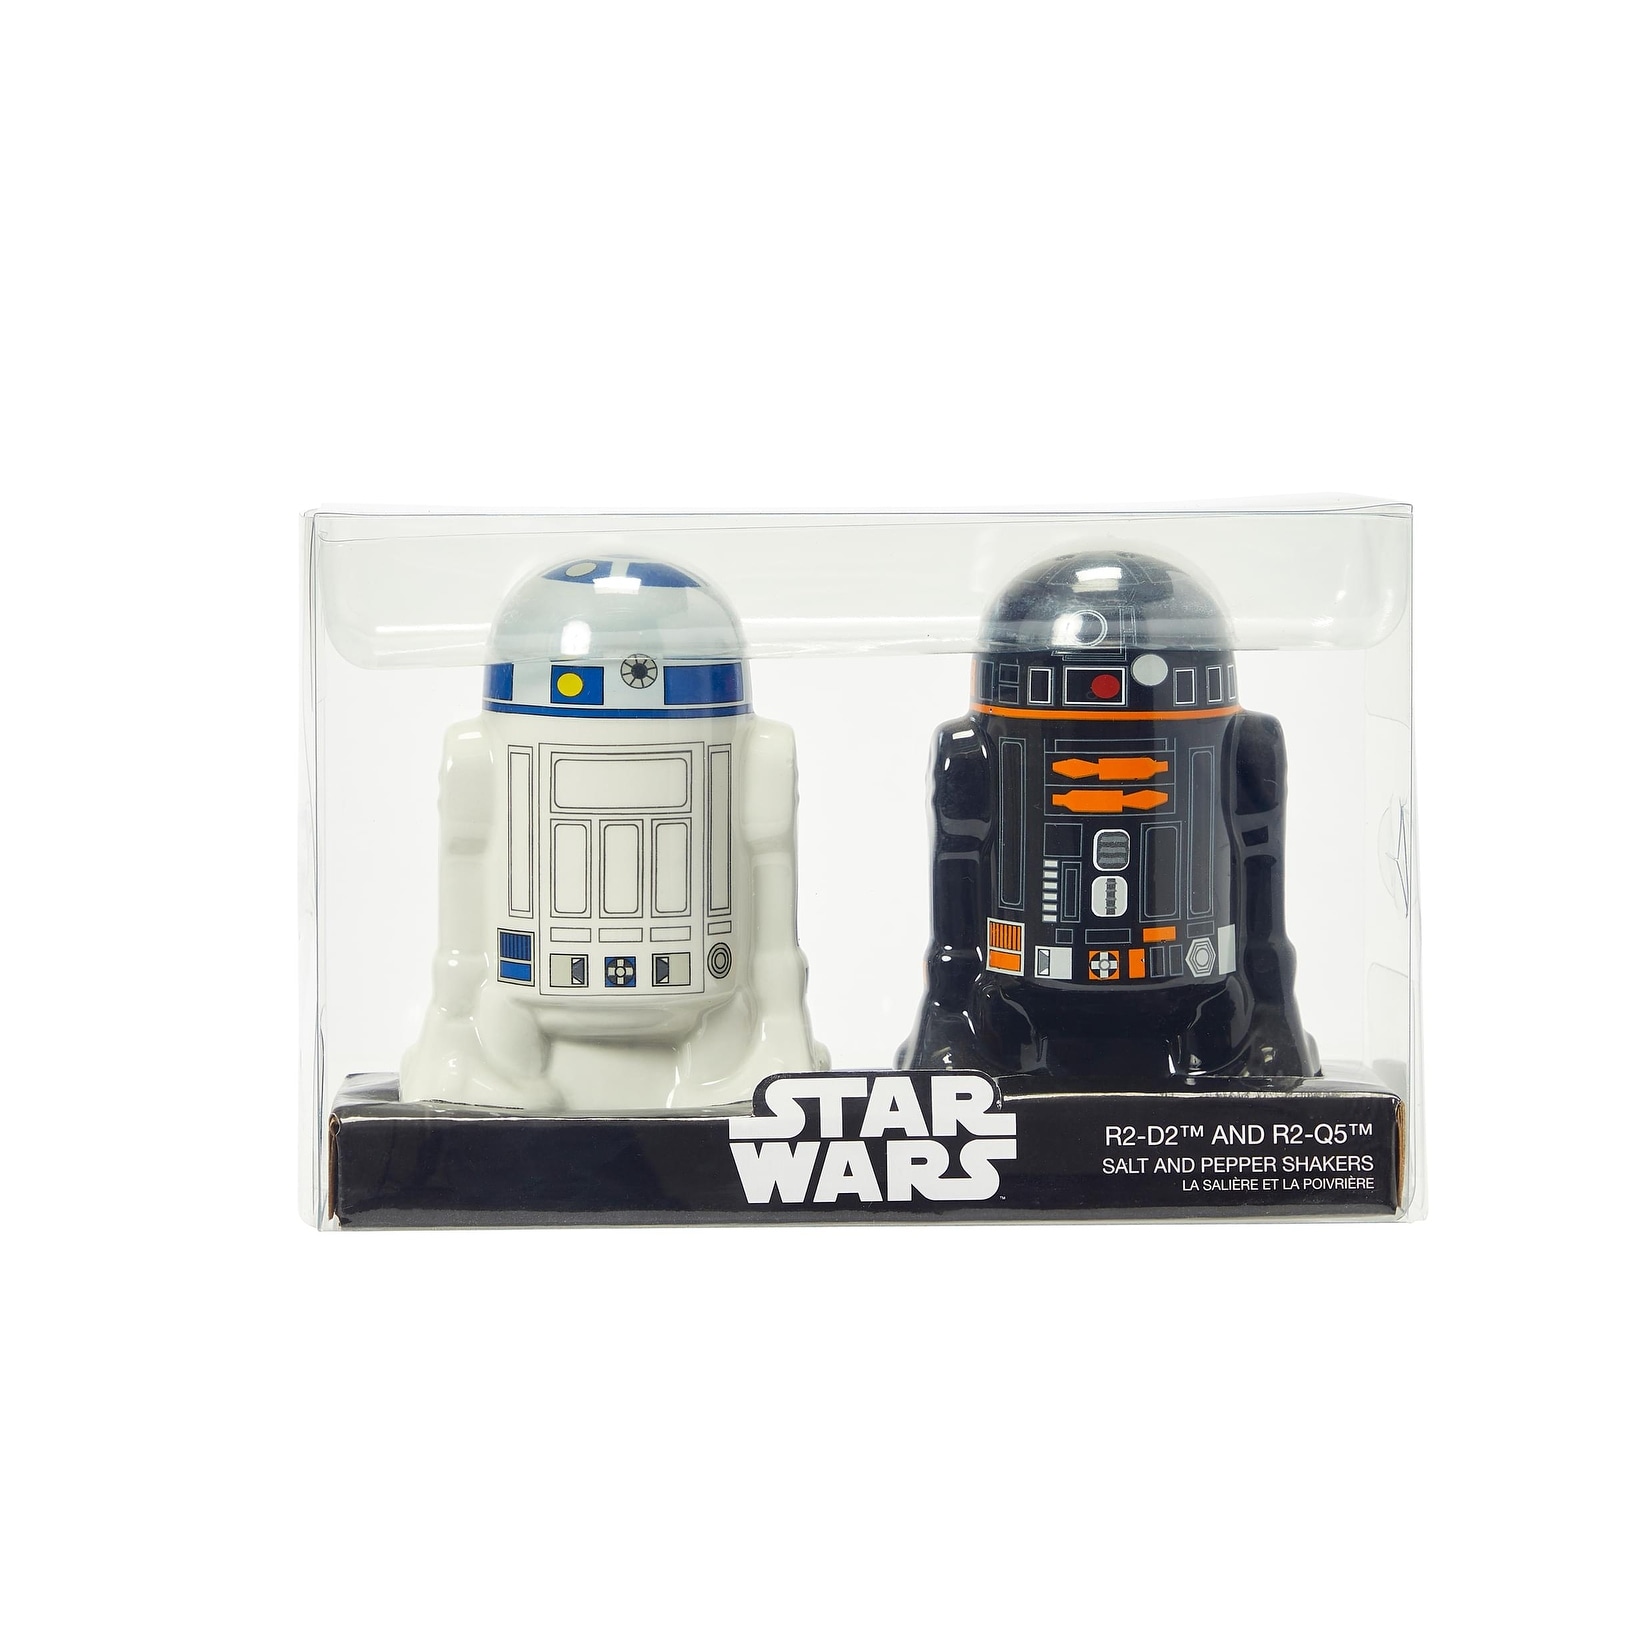 Star Wars R2D2 & C3PO Salt and Pepper Shaker Set NEW Disney